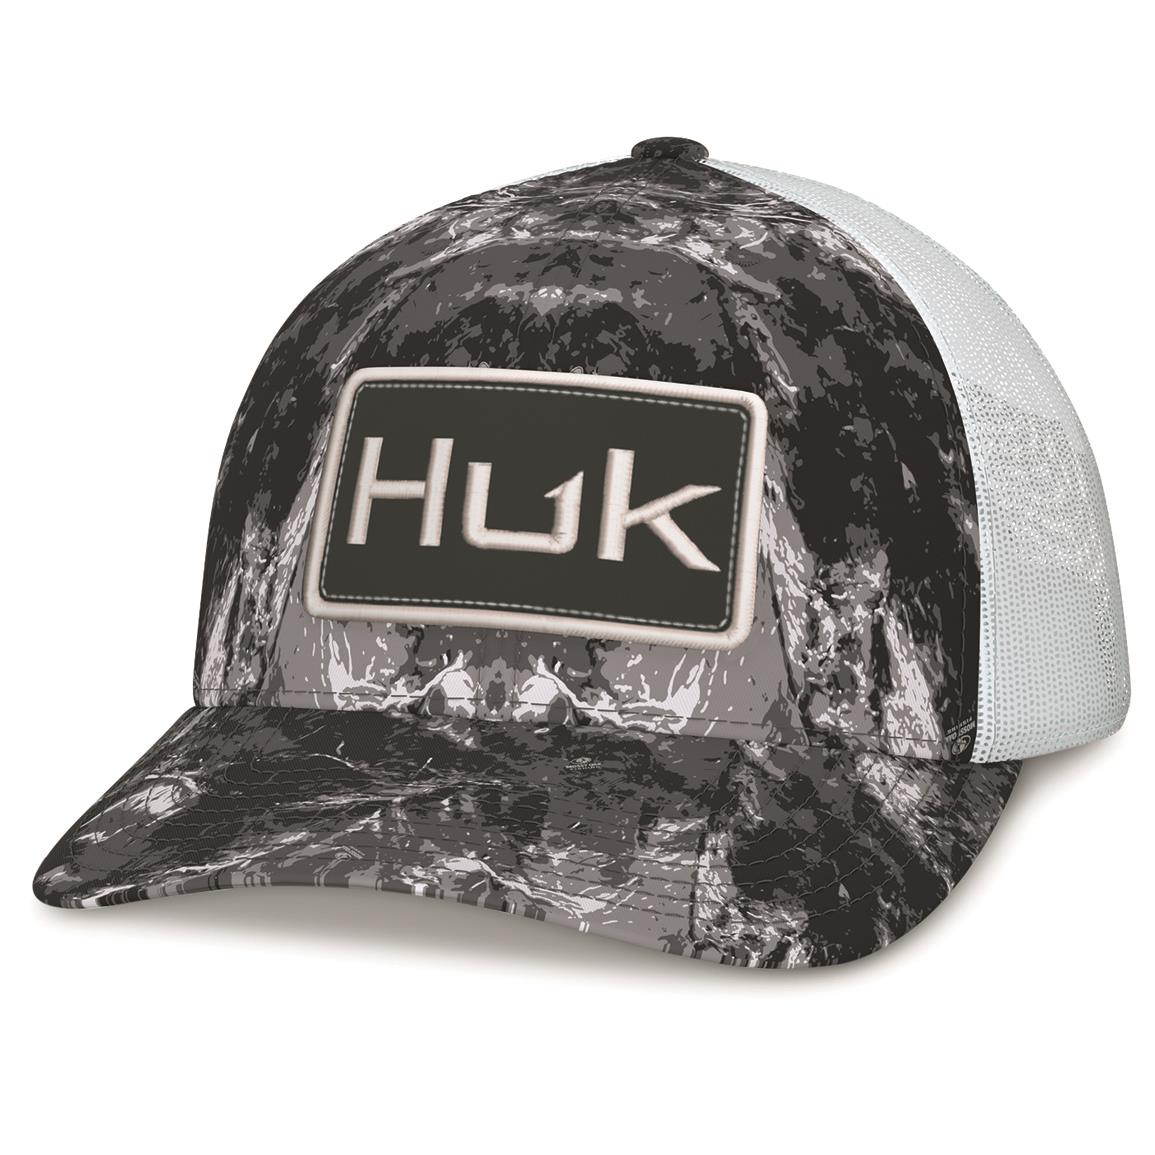 Huk Mossy Oak Stormwater Trucker Hat - 736463, Hats & Caps at